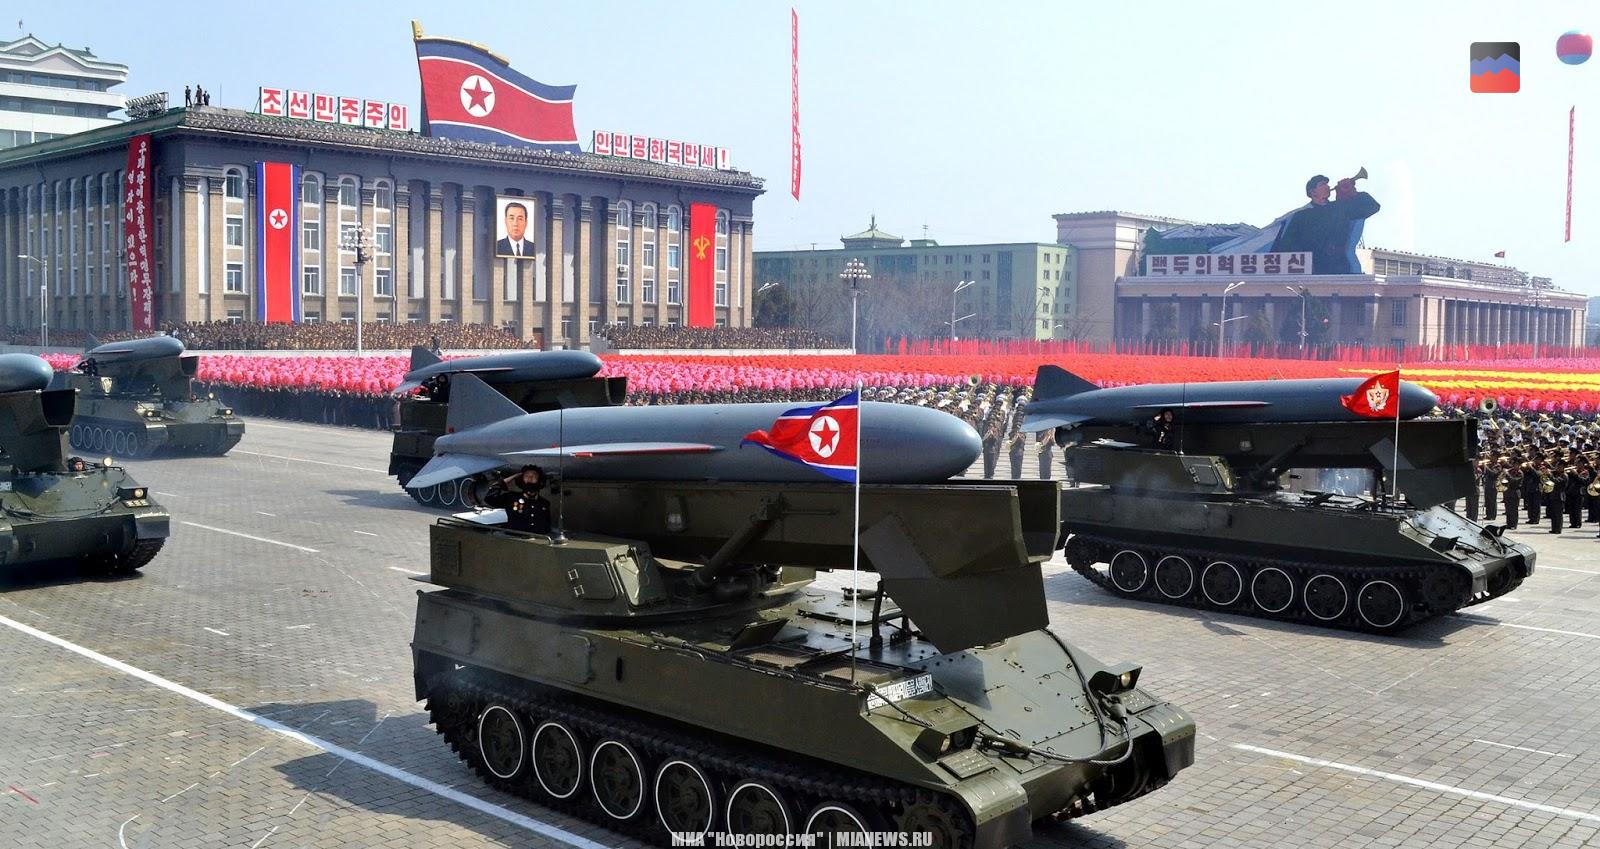 North Korea threatened Washington by unprecedented arms